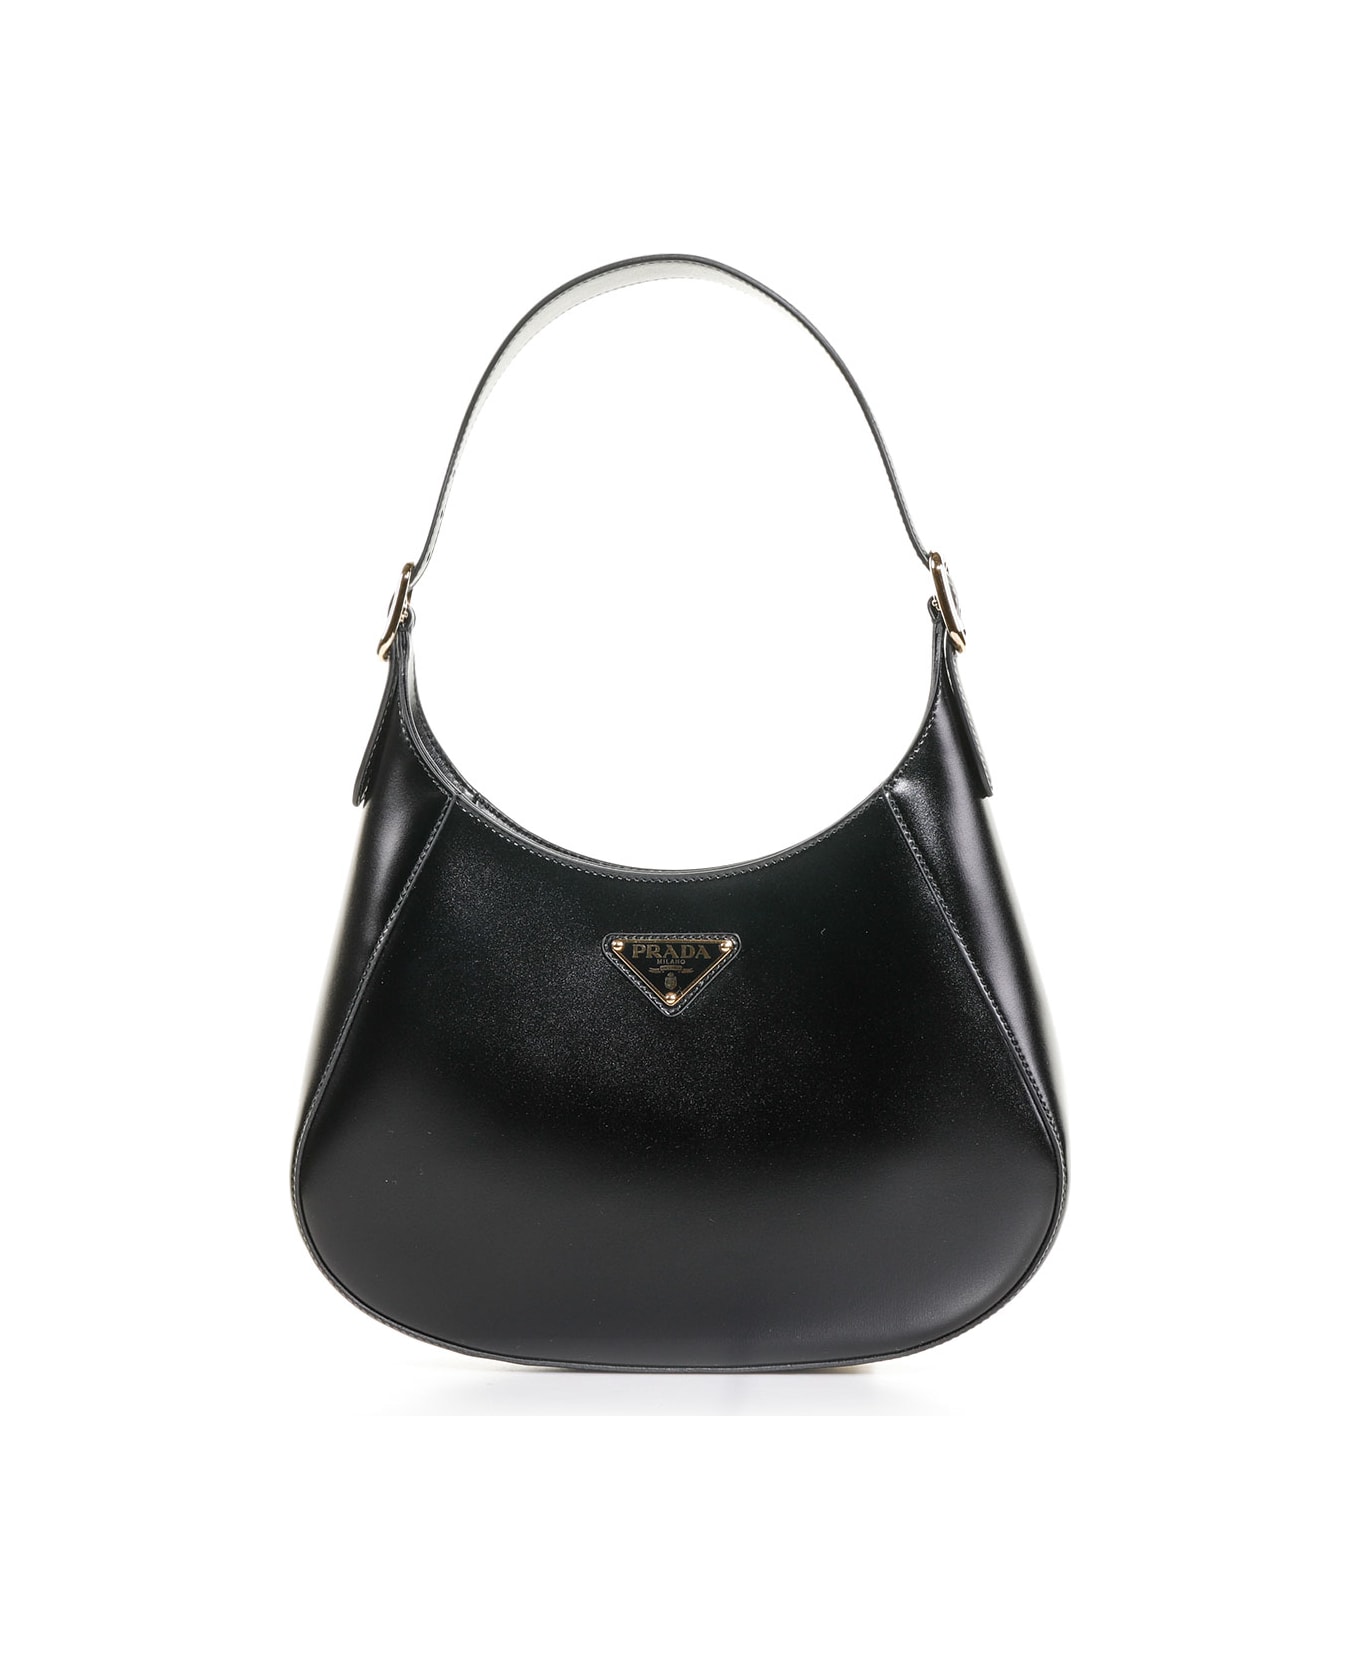 Prada Shoulder Bag In Leather With Logo - NERO